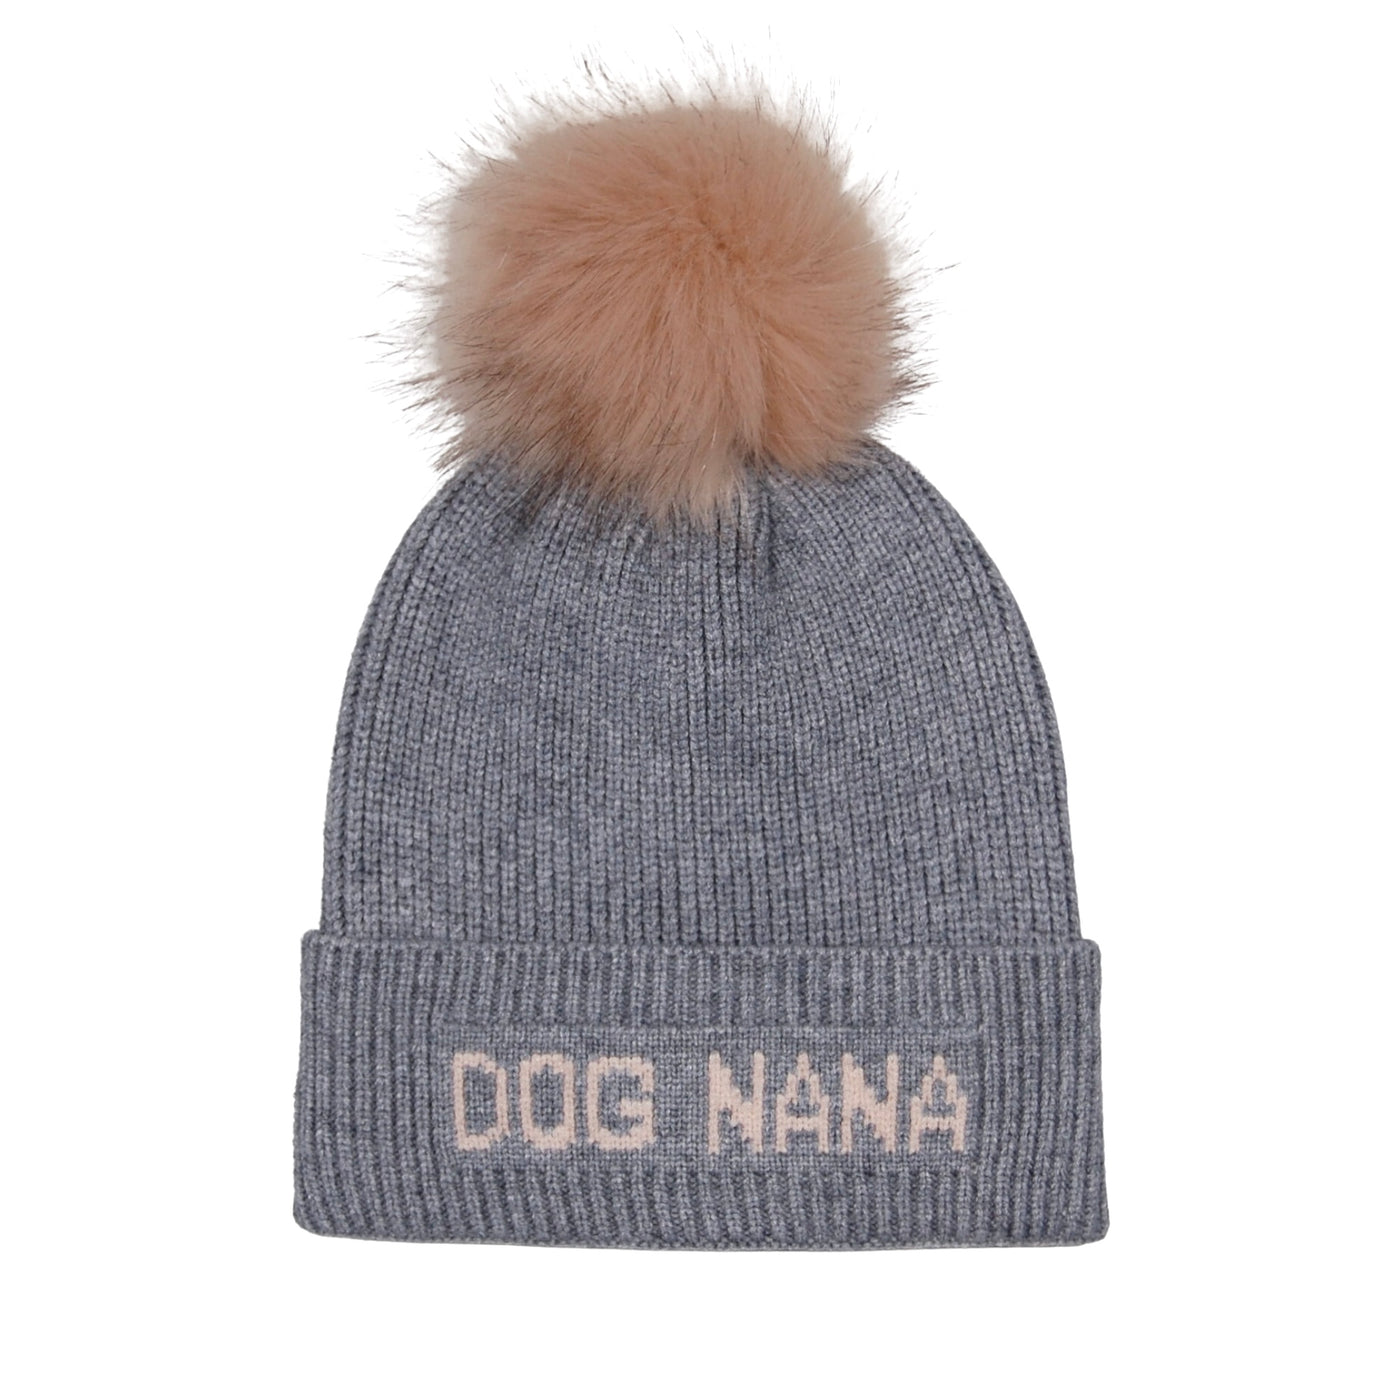 Hatphile Dog Nana Pompom Knit Beanie Toque